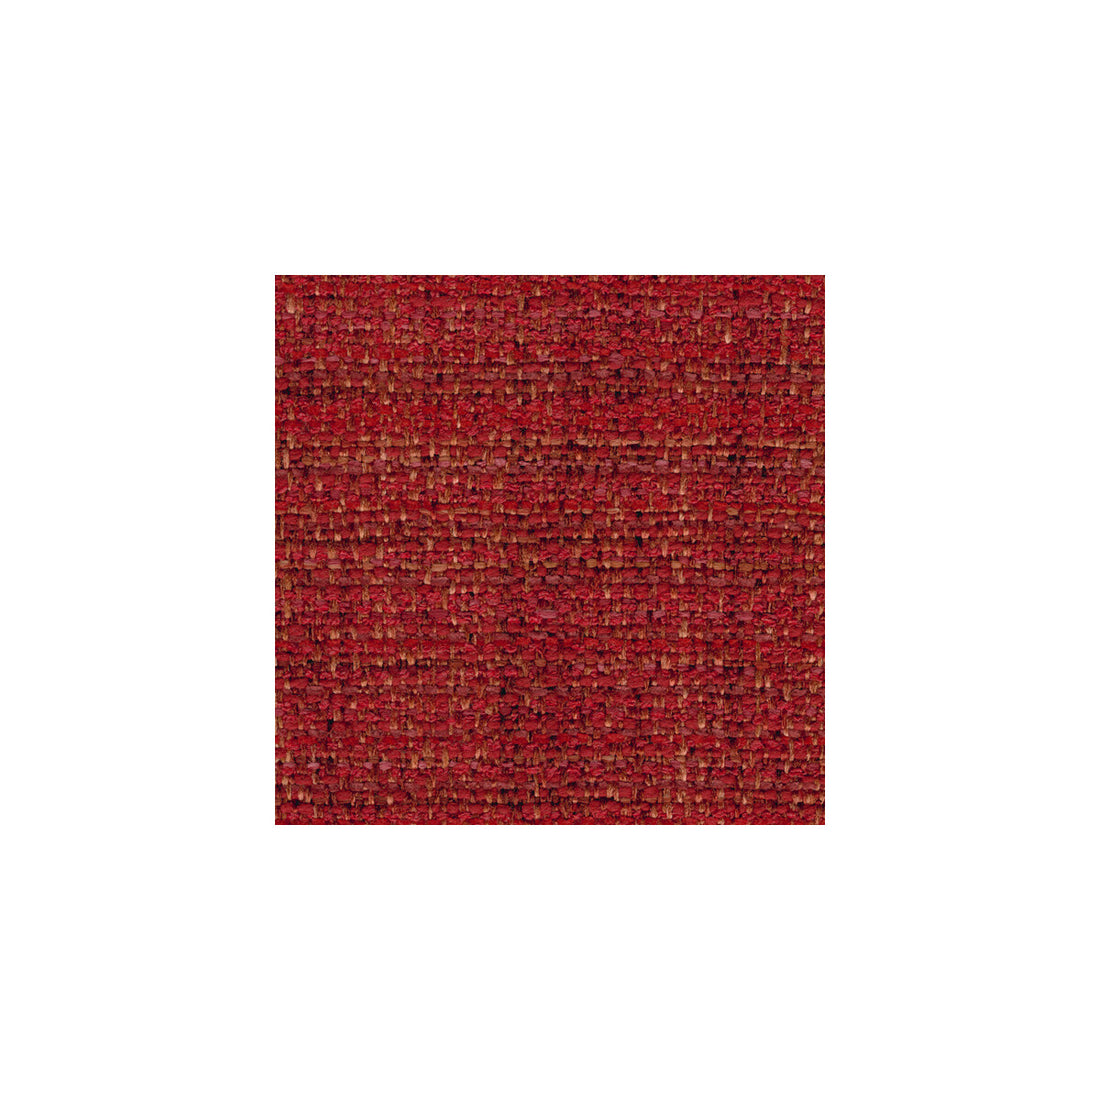 Kravet Smart fabric in 31744-24 color - pattern 31744.24.0 - by Kravet Smart